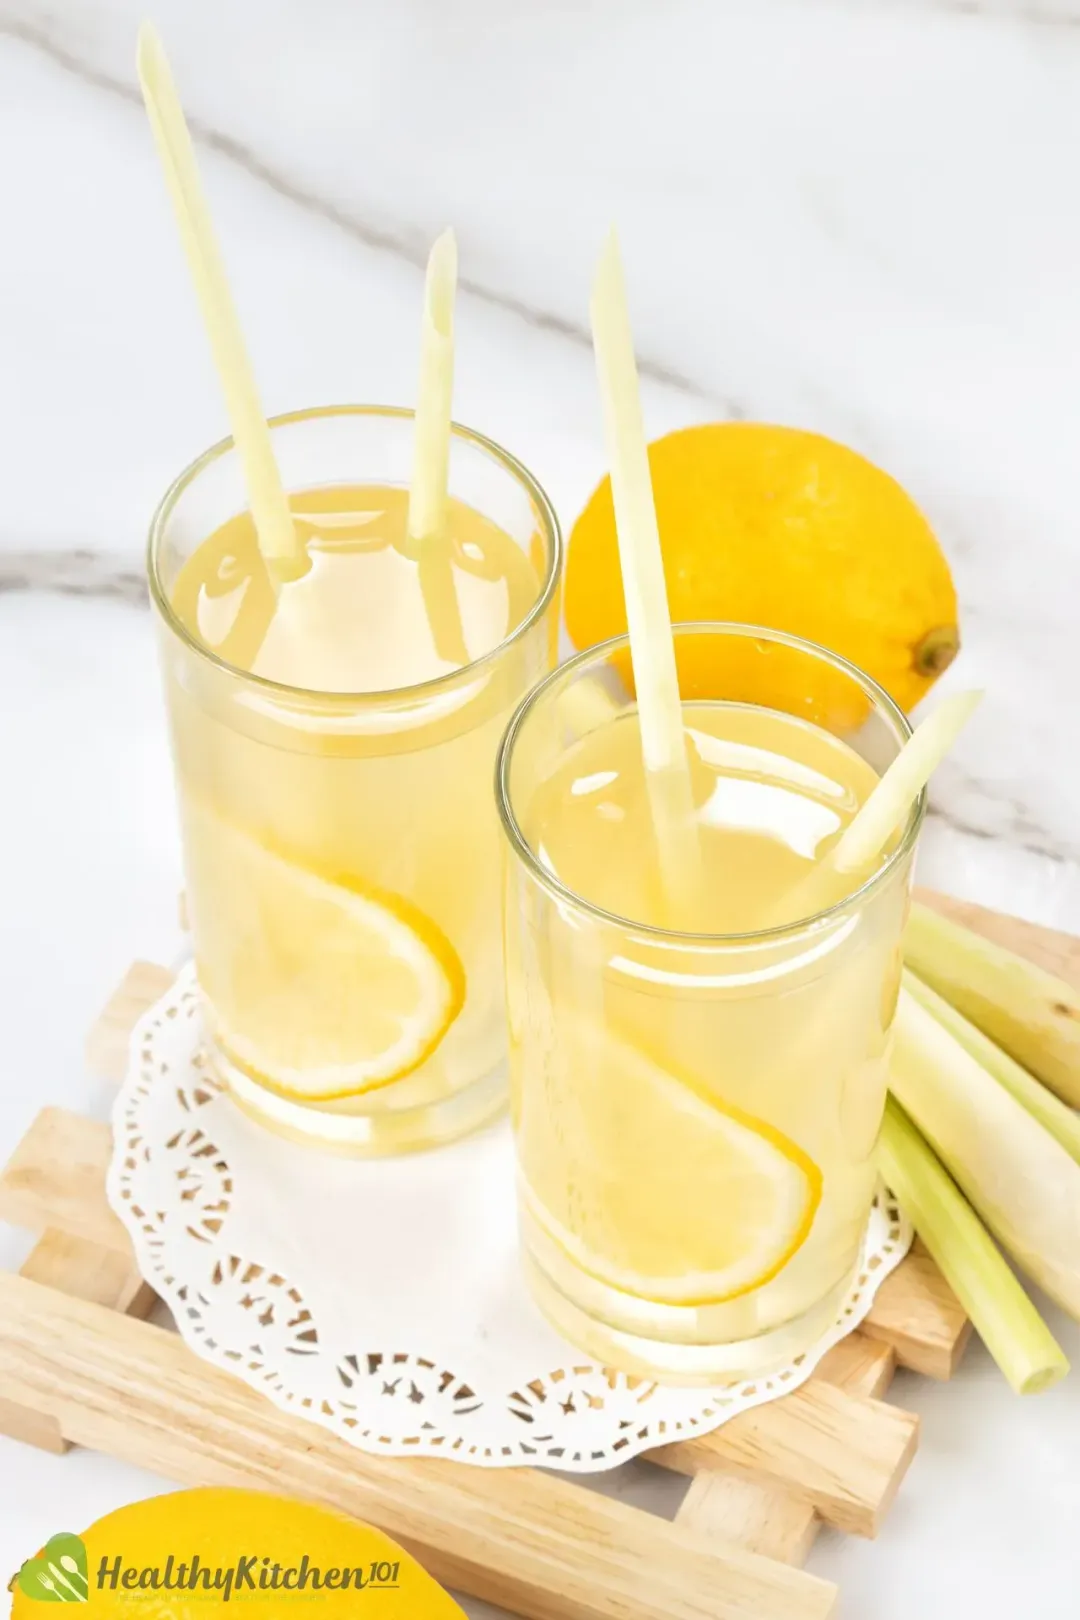 Two glasses of lemon juice and cider drinks with lemon wheels inside, next to whole lemons and lemongrass stalks